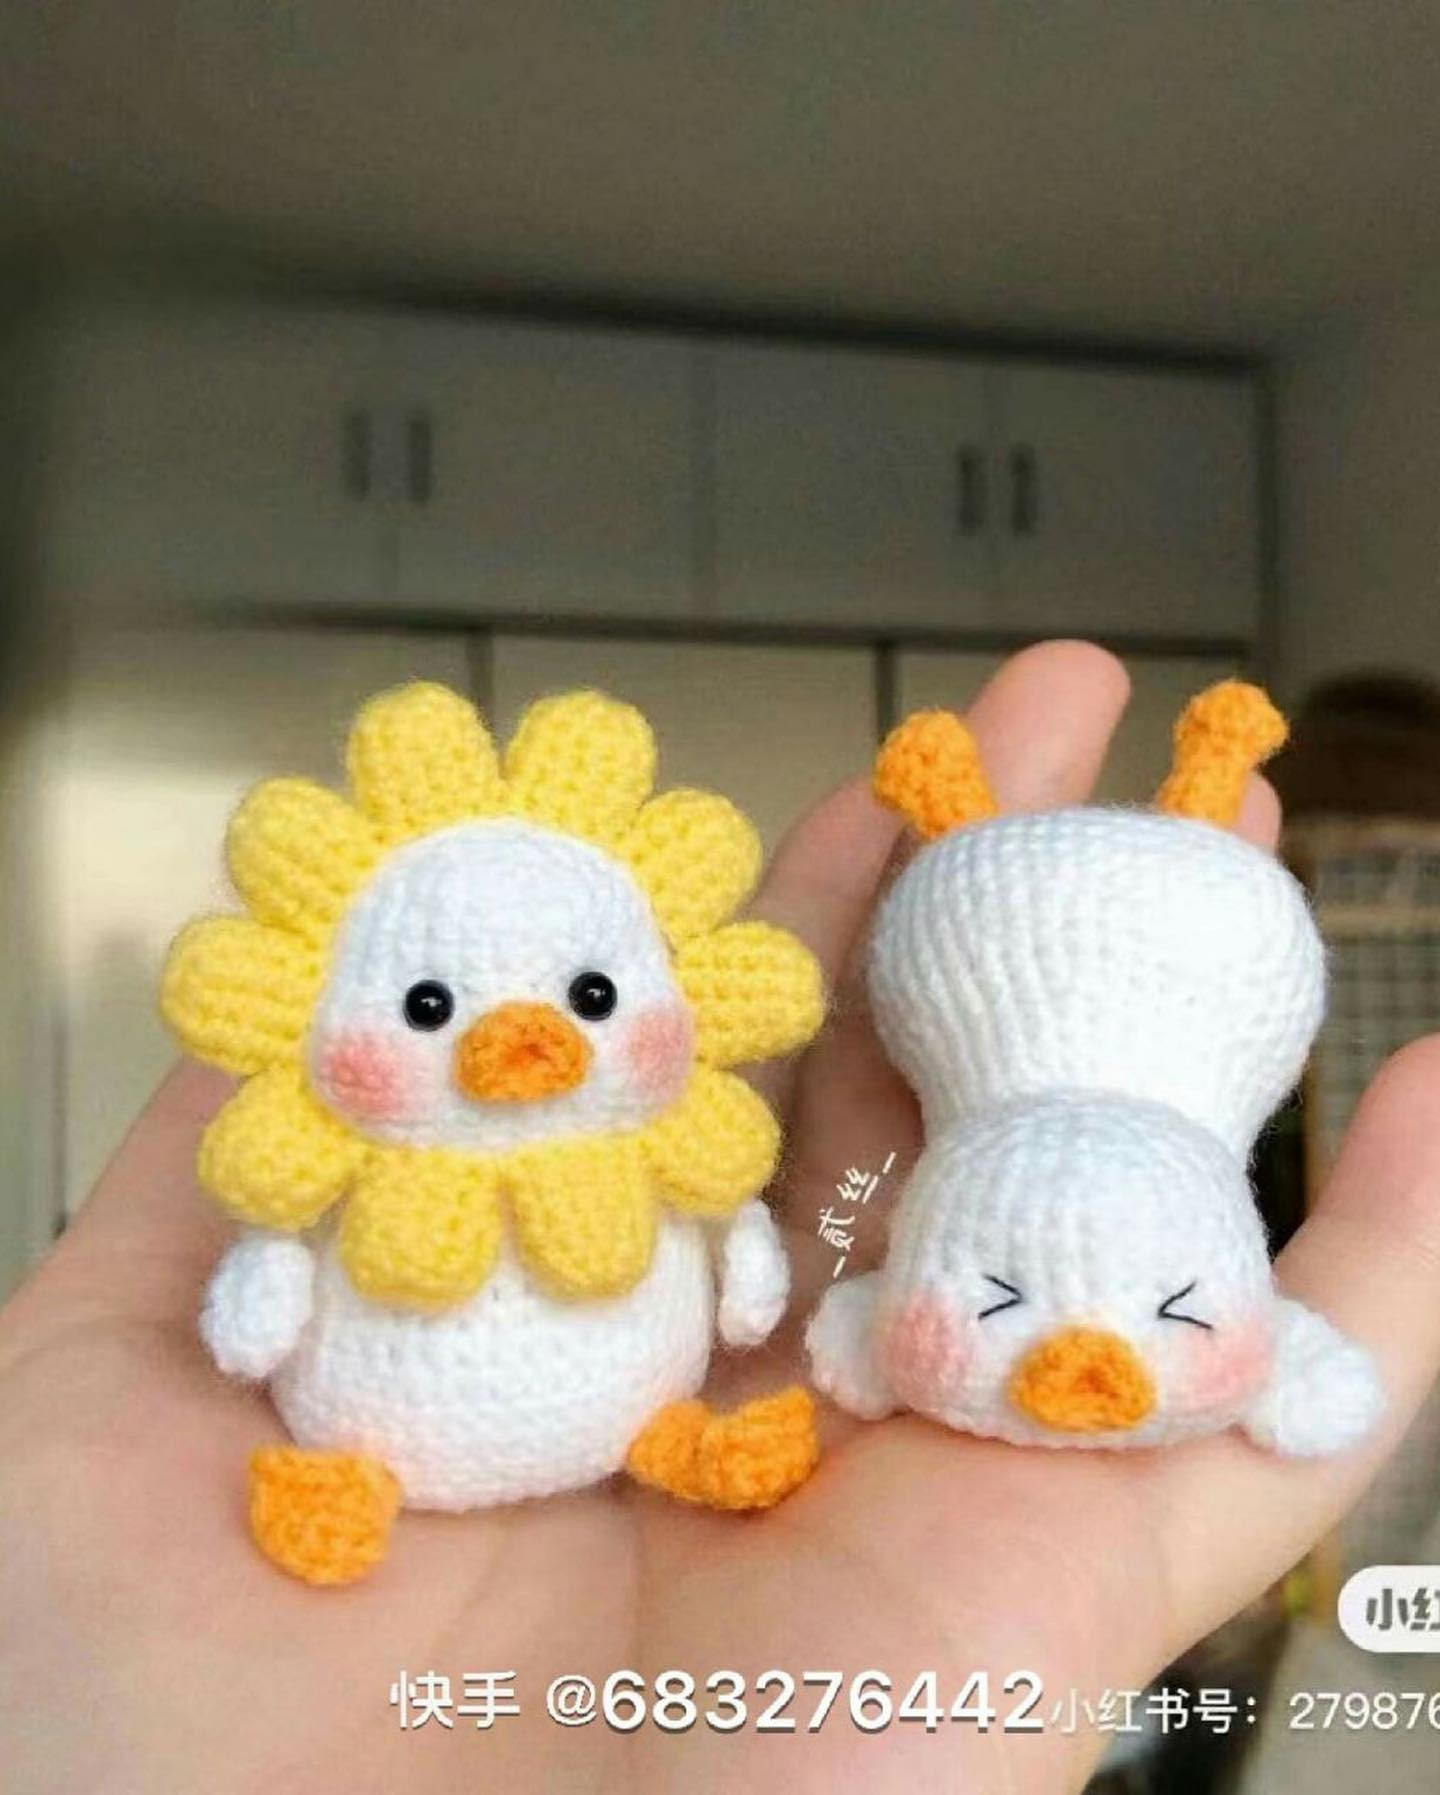 white duck, yellow flower crochet pattern